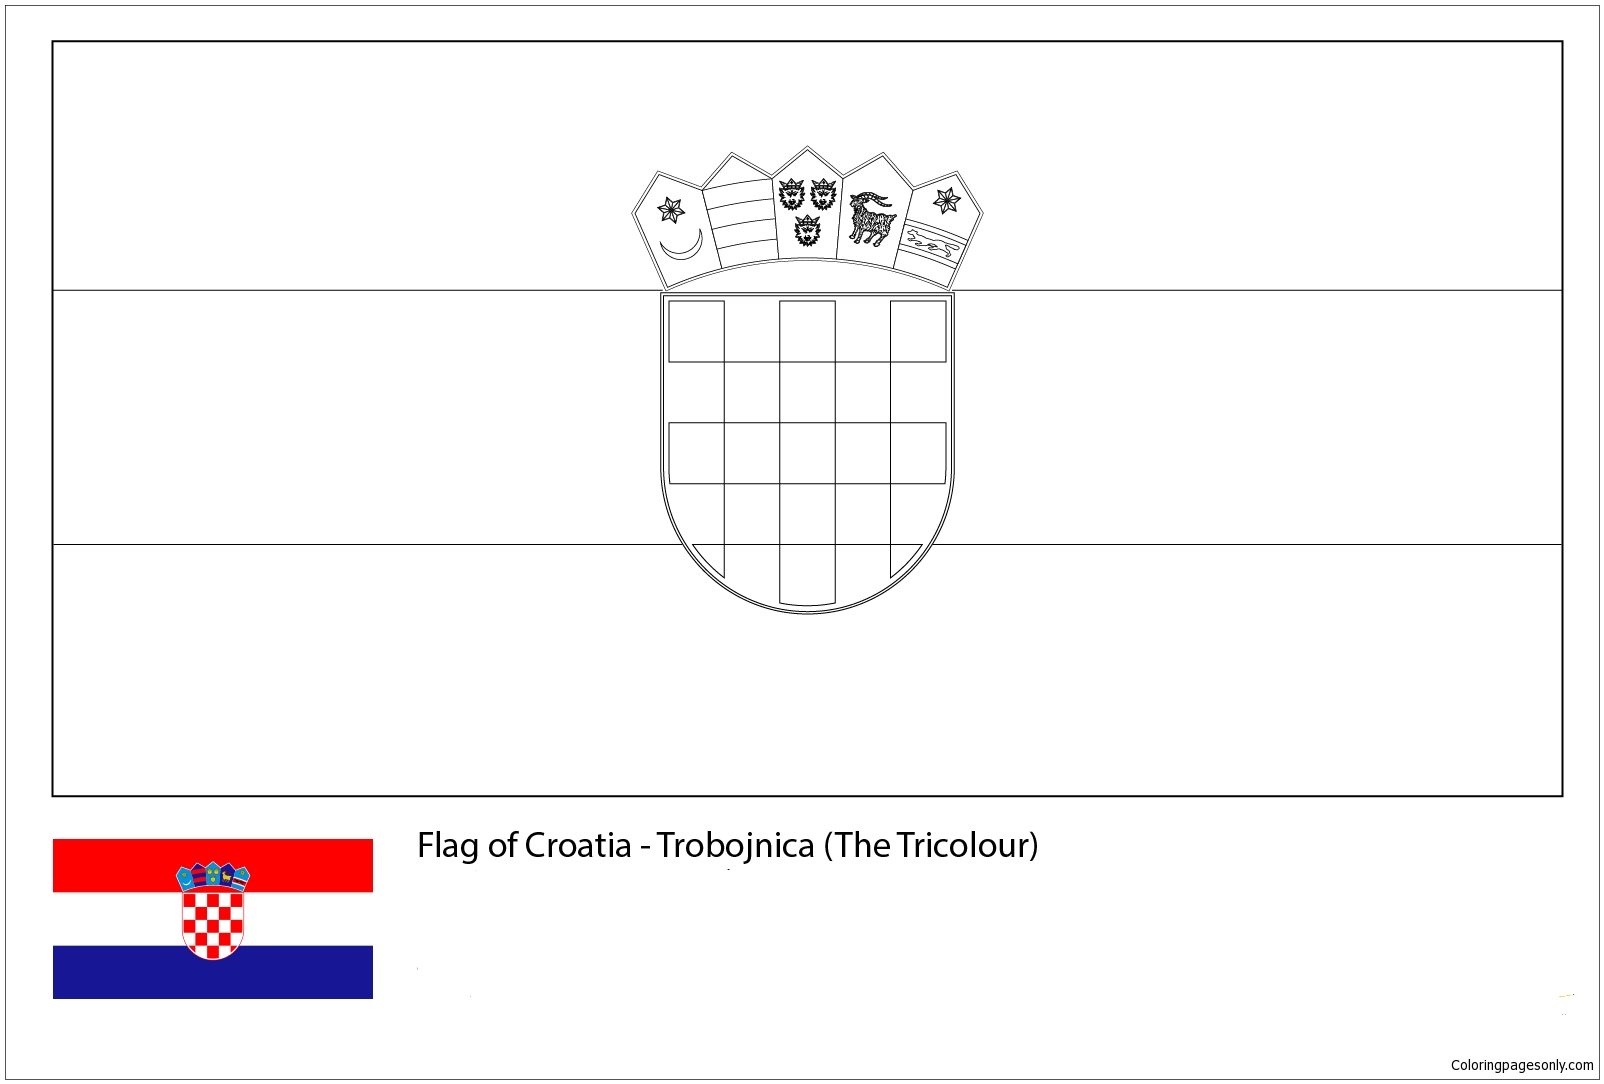 Флаг Хорватии-ЧМ-2018 из флагов ЧМ-2018